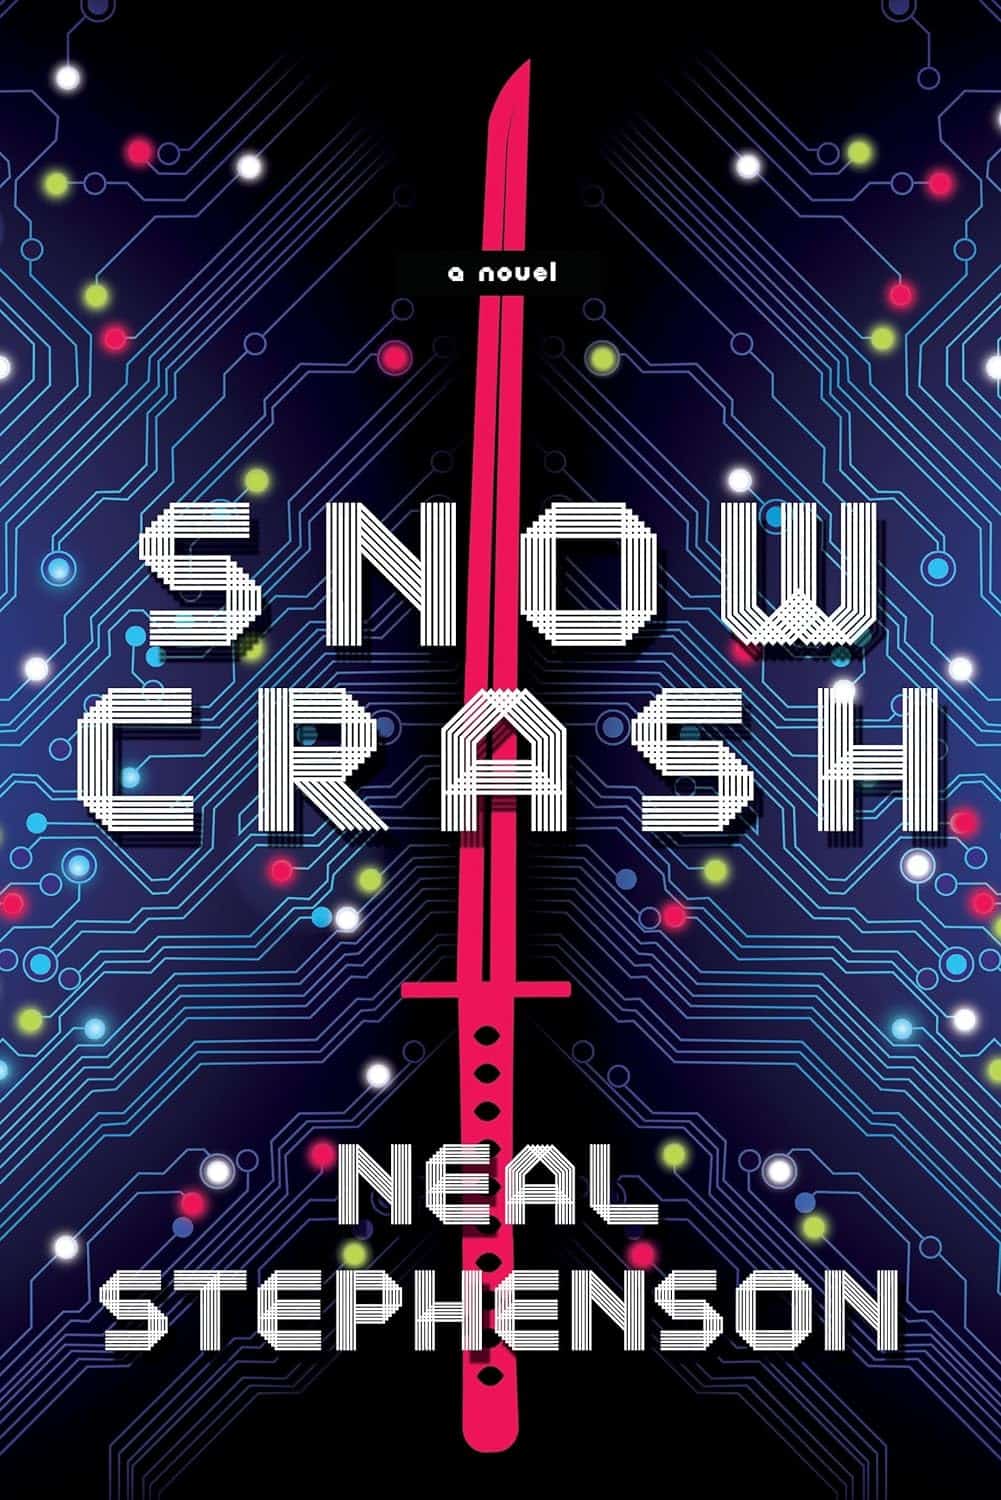 Snow Crash by Neal Stephenson (1992)